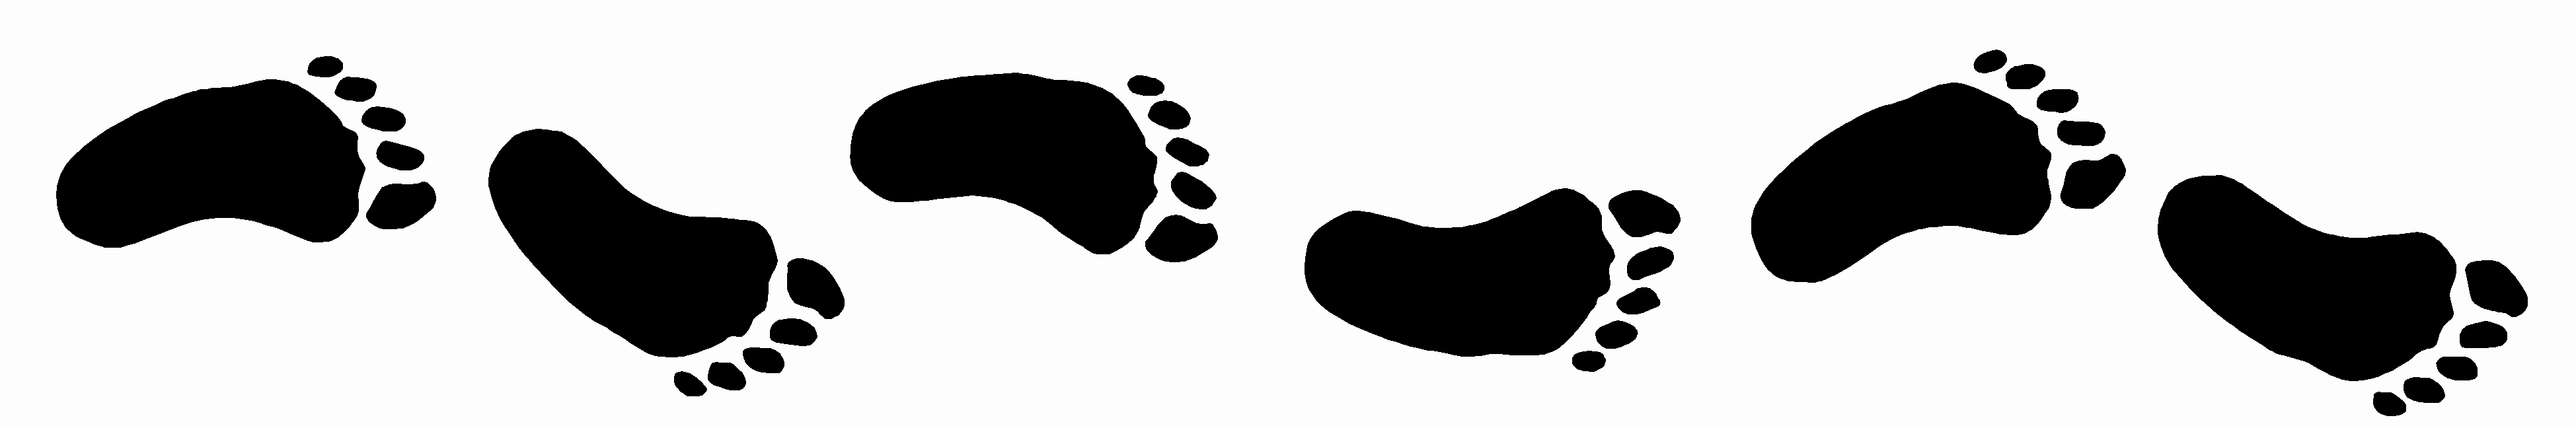 Footprints Gif - ClipArt Best